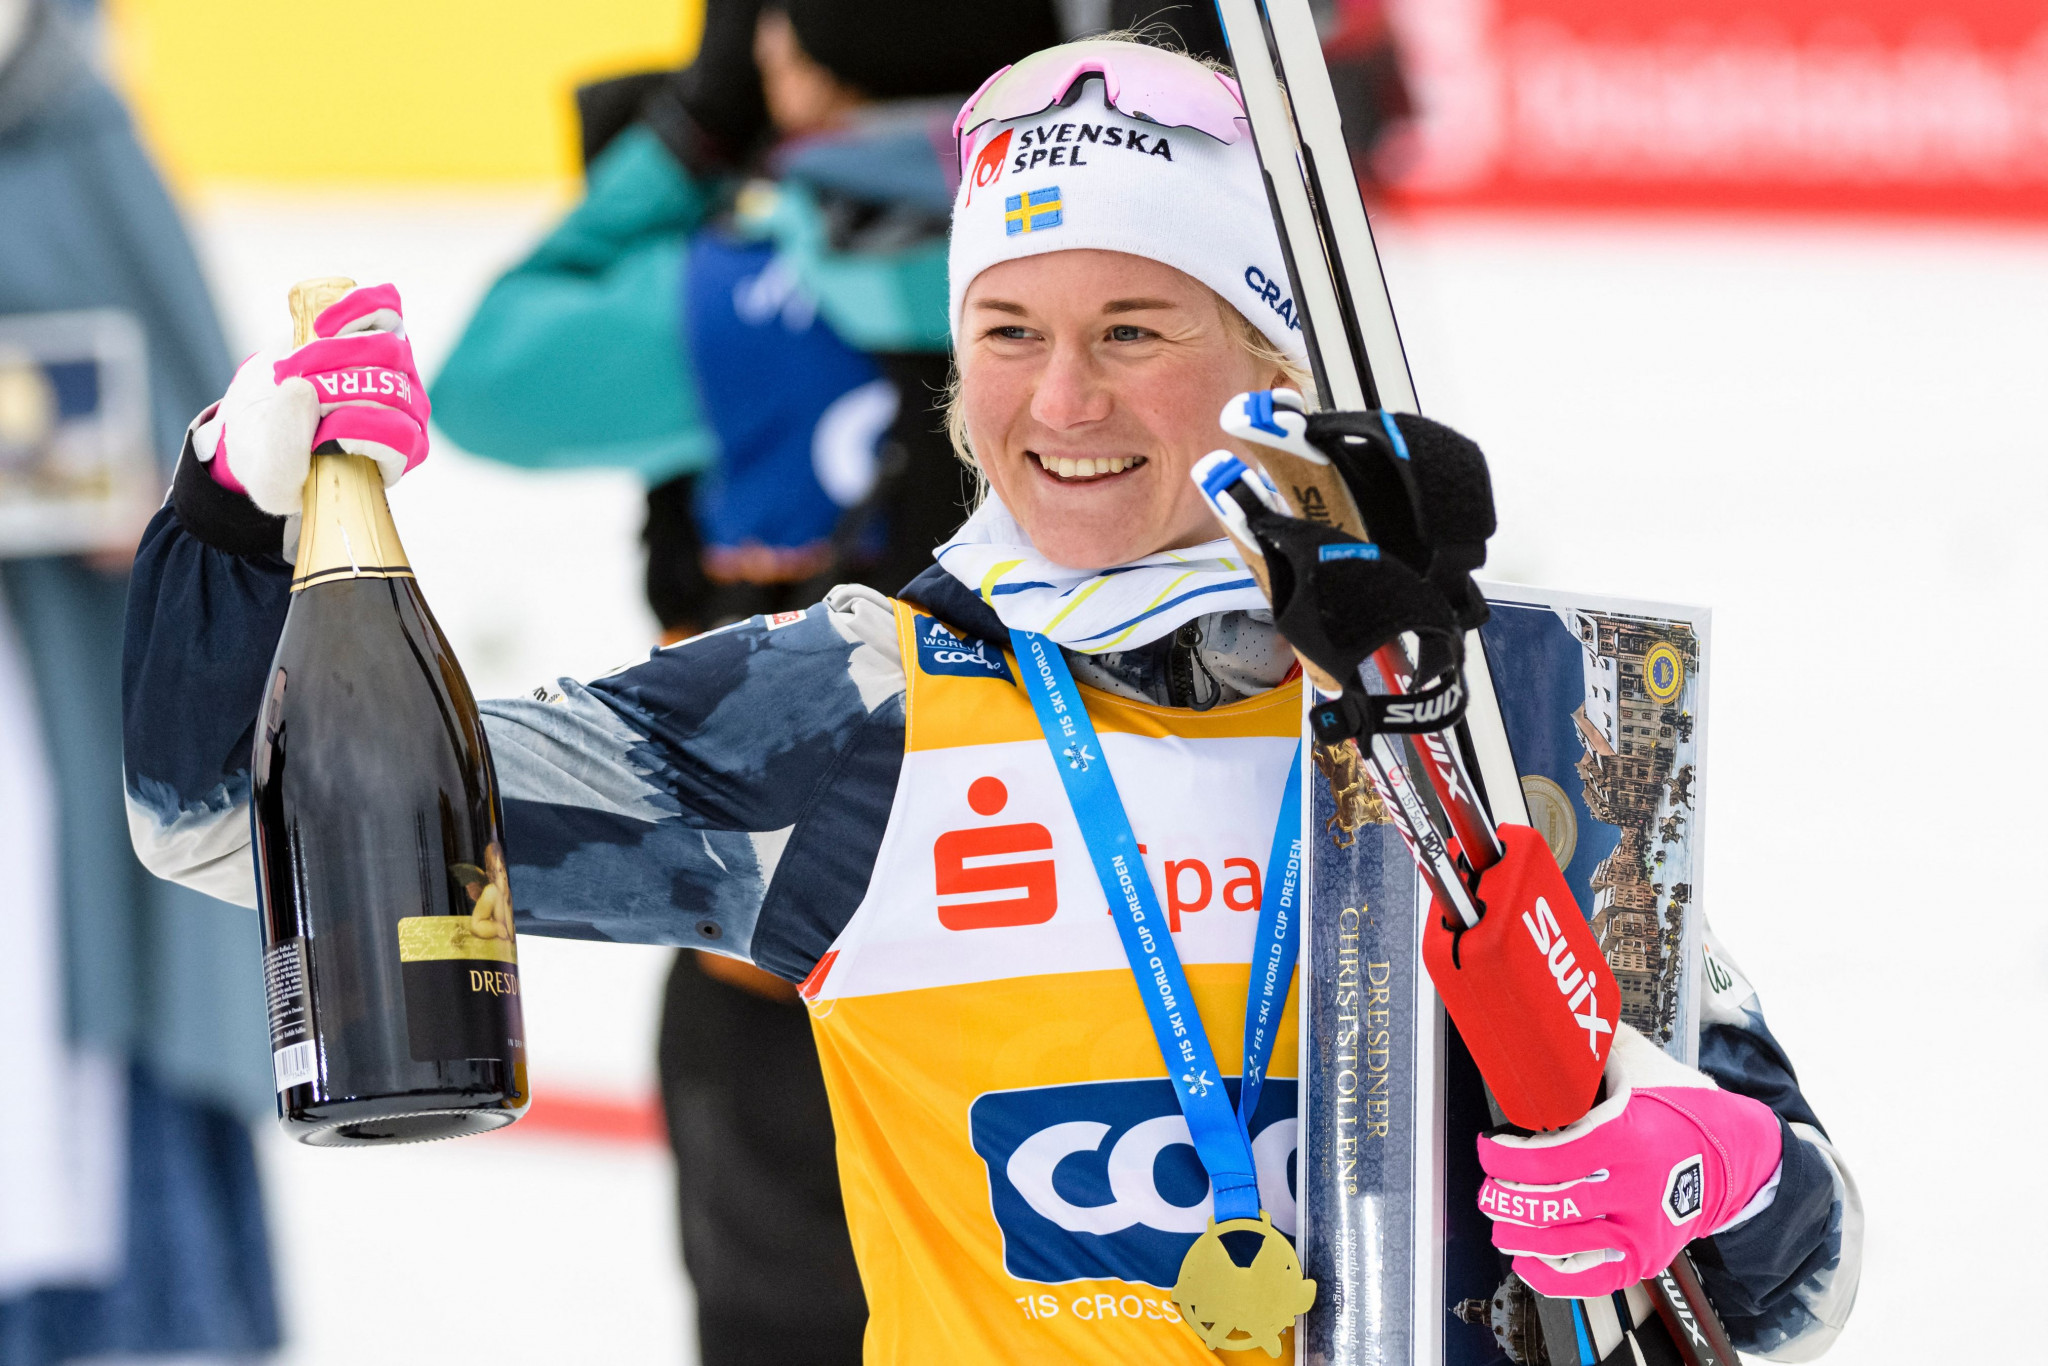 Maja Dahlqvist has won every sprint contest this season  ©Getty Images